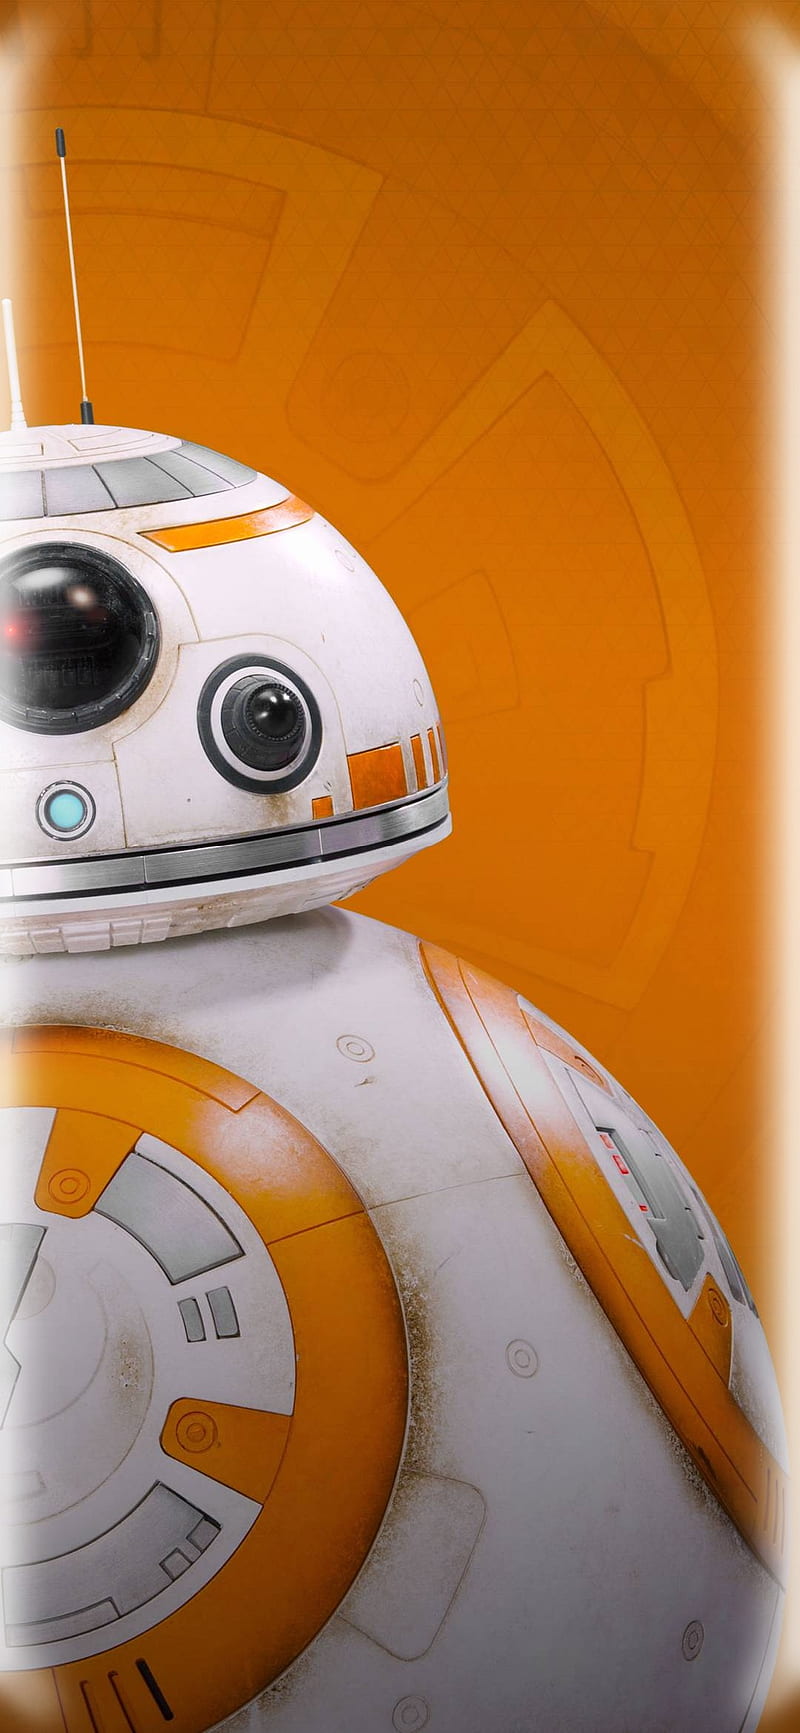 8 Camera Disney Edge Ios Iphome R2 D2 Robot Star Wars Hd Phone Wallpaper Peakpx